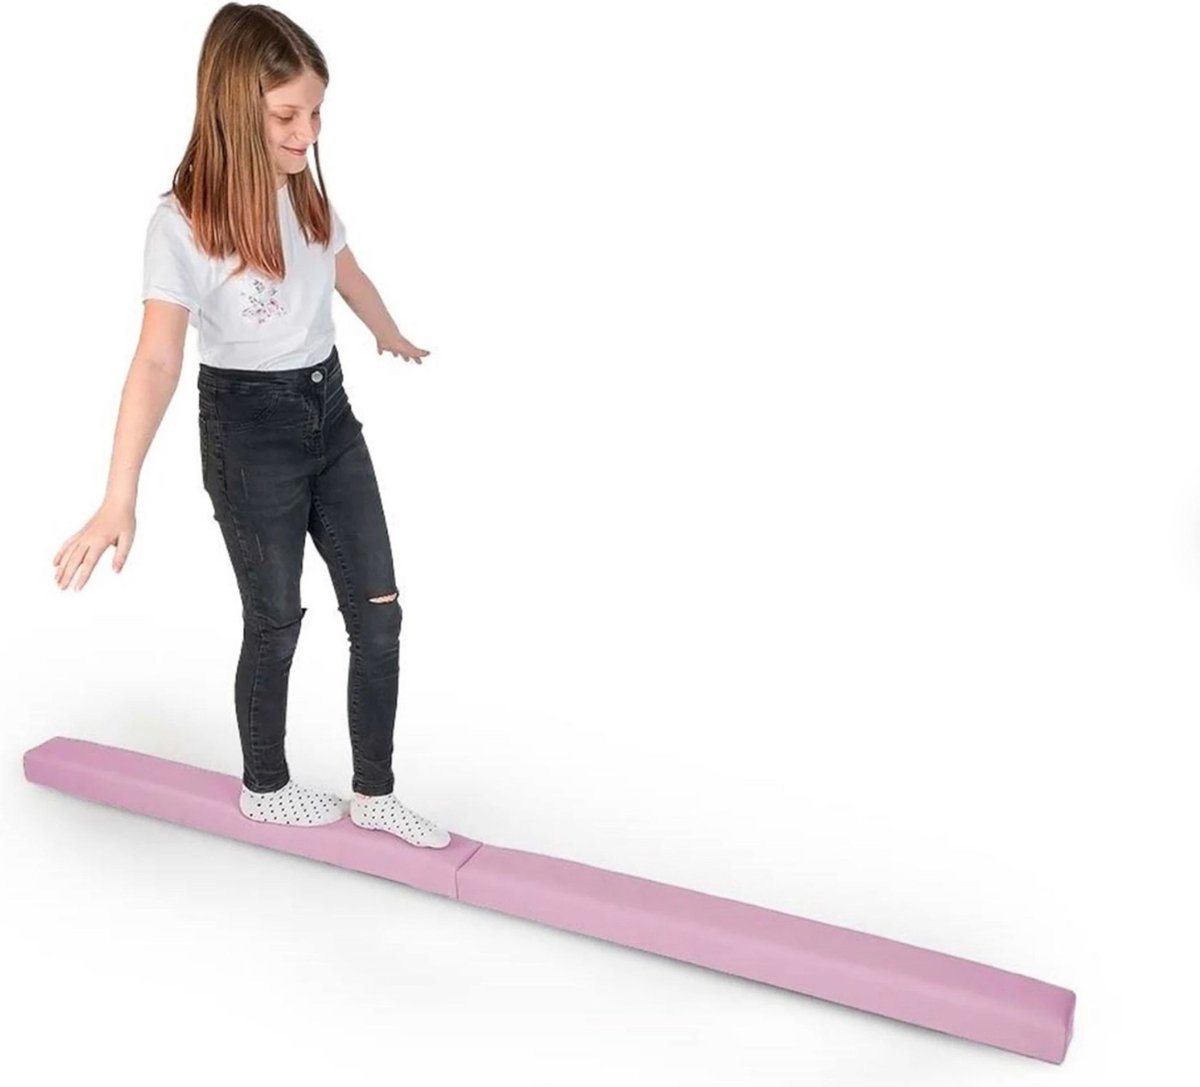 Opvouwbare Turnbalk Roze ⭐ Gratis oefenvideo`s ⭐ Ideale compacte balk om thuis oefeningen op te turnen | Opvouwbare Evenwichtsbalk